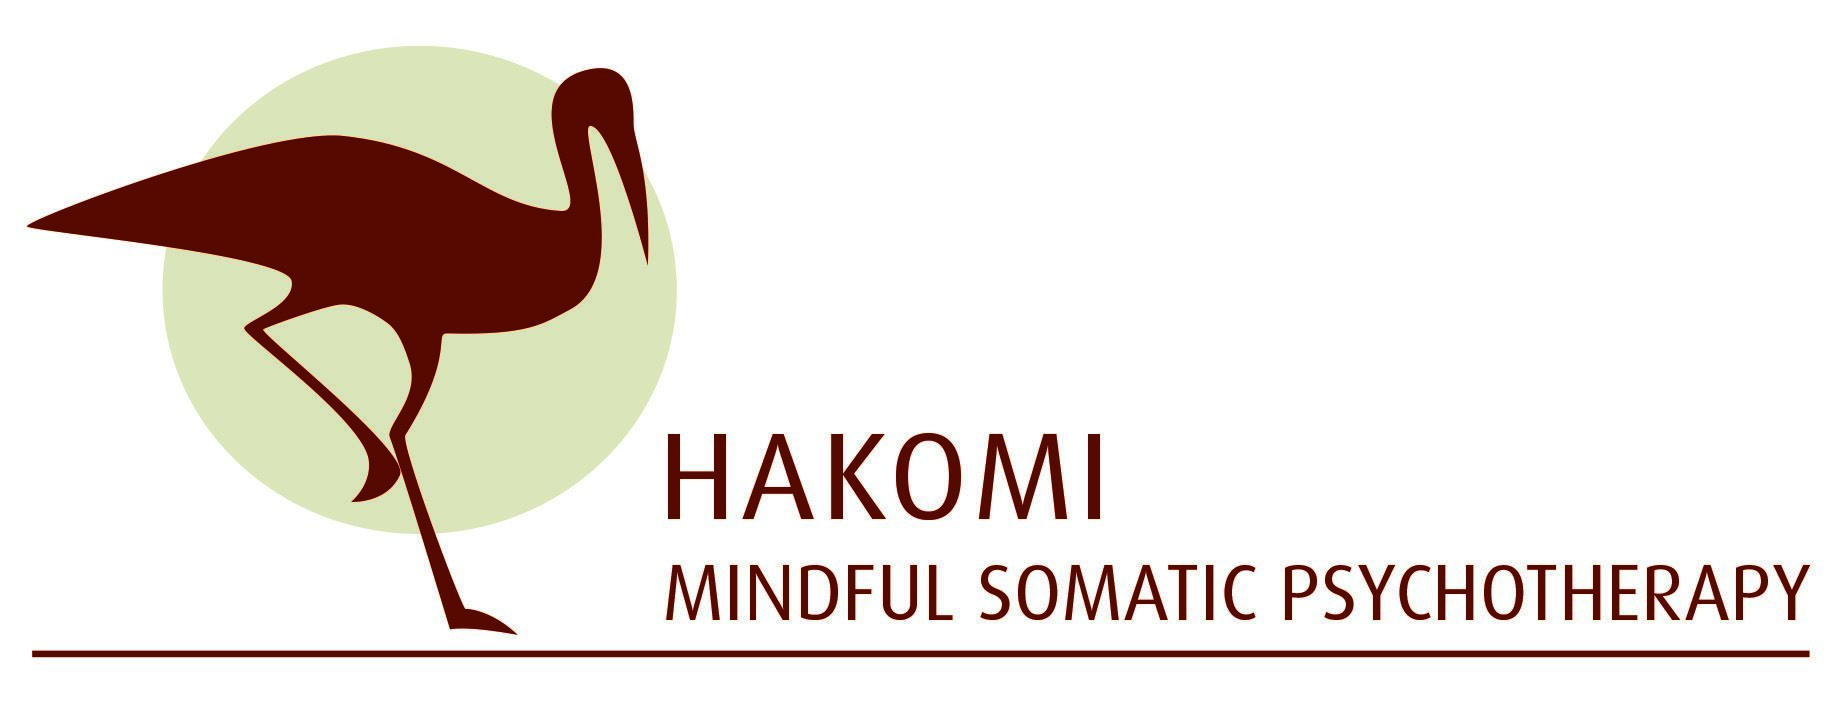 Hakomi Mindful Somatic Psychotherapy Logo